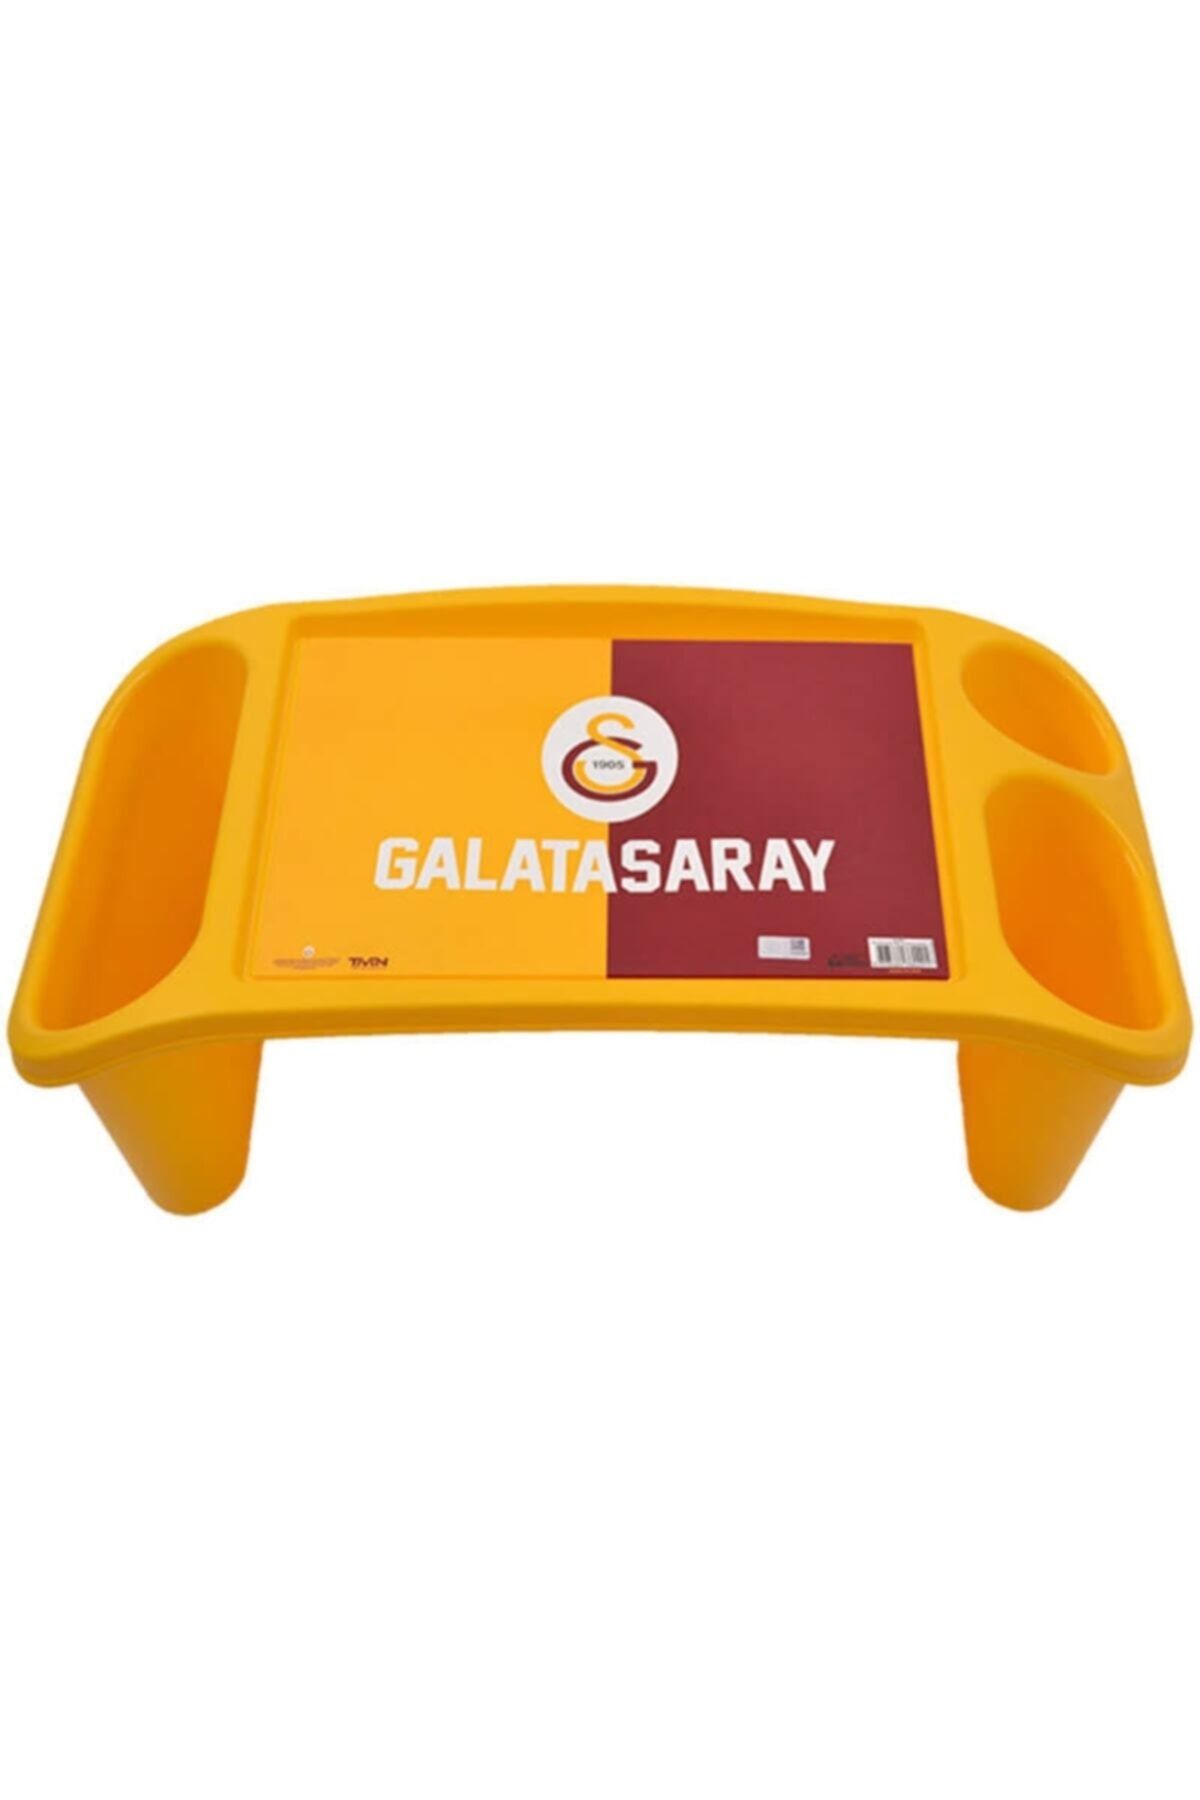 Timon Tmn 501486 Galatasaray Mini Çalışma Masası*12